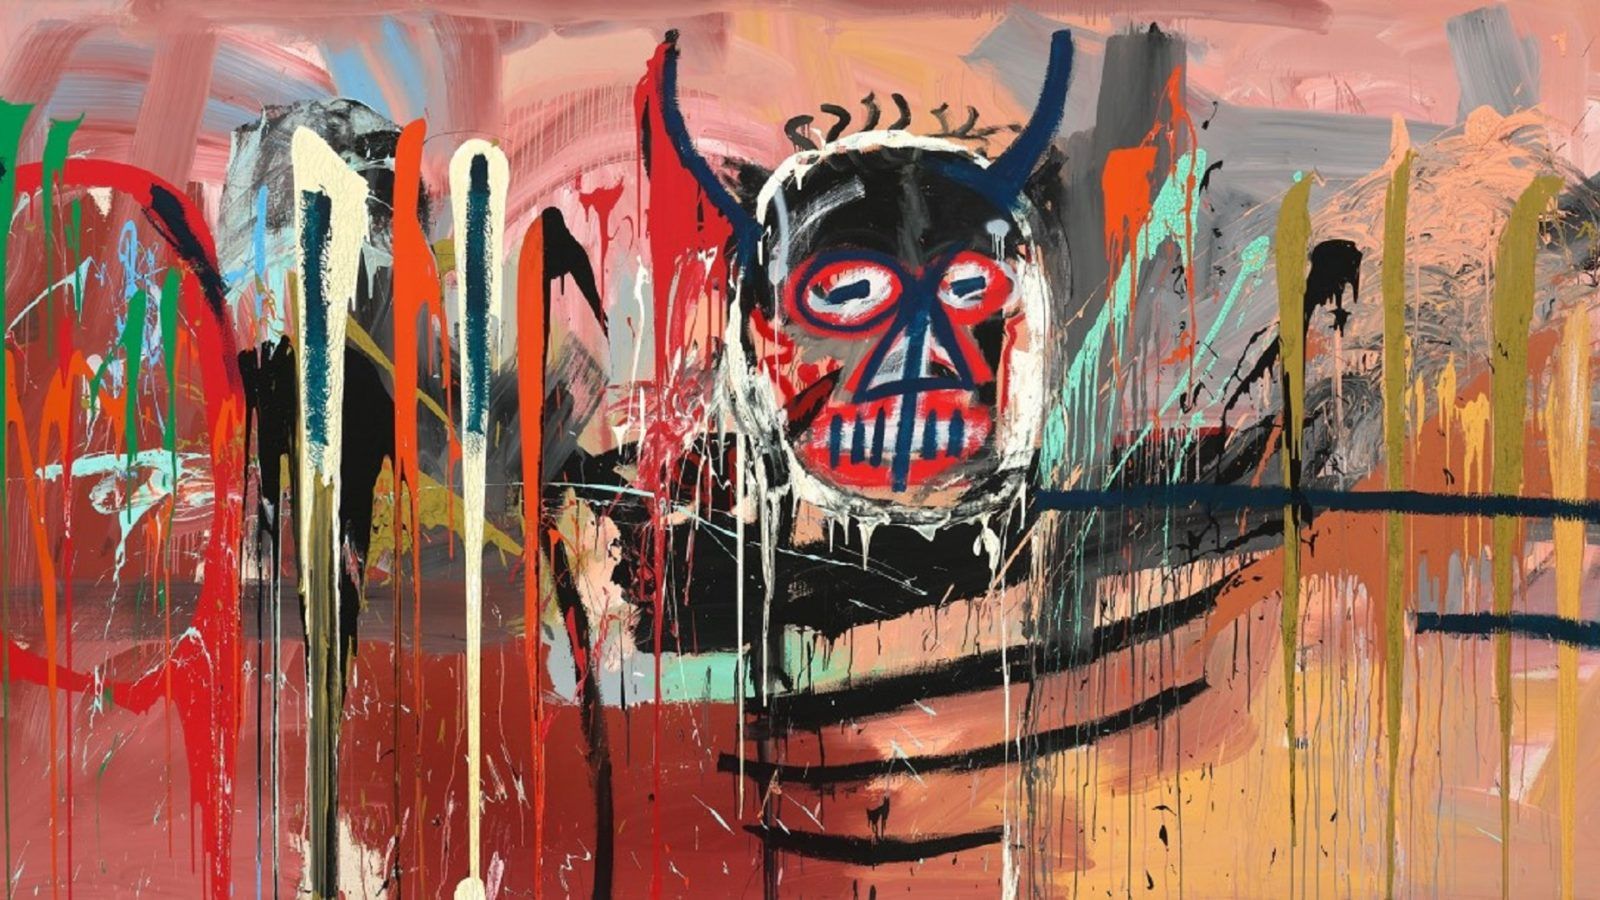 Japanese art collector Yusaku Maezawa to auction Basquiat’s ‘Untitled’ artwork